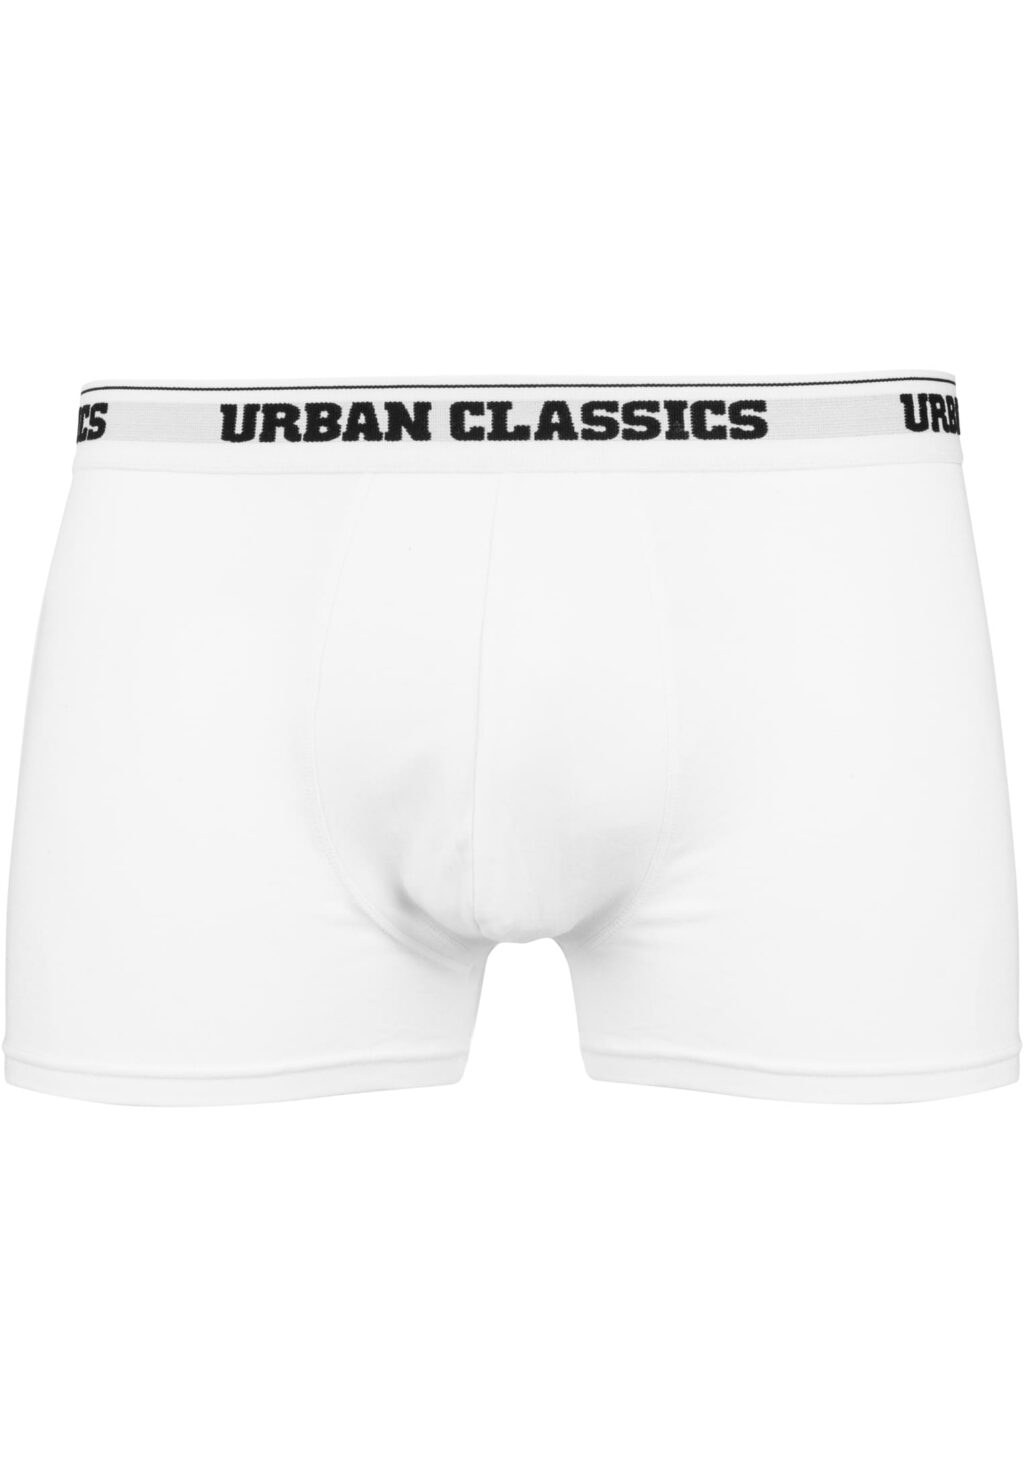 Urban Classics Organic Boxer Shorts 3-Pack white/navy/black TB3838